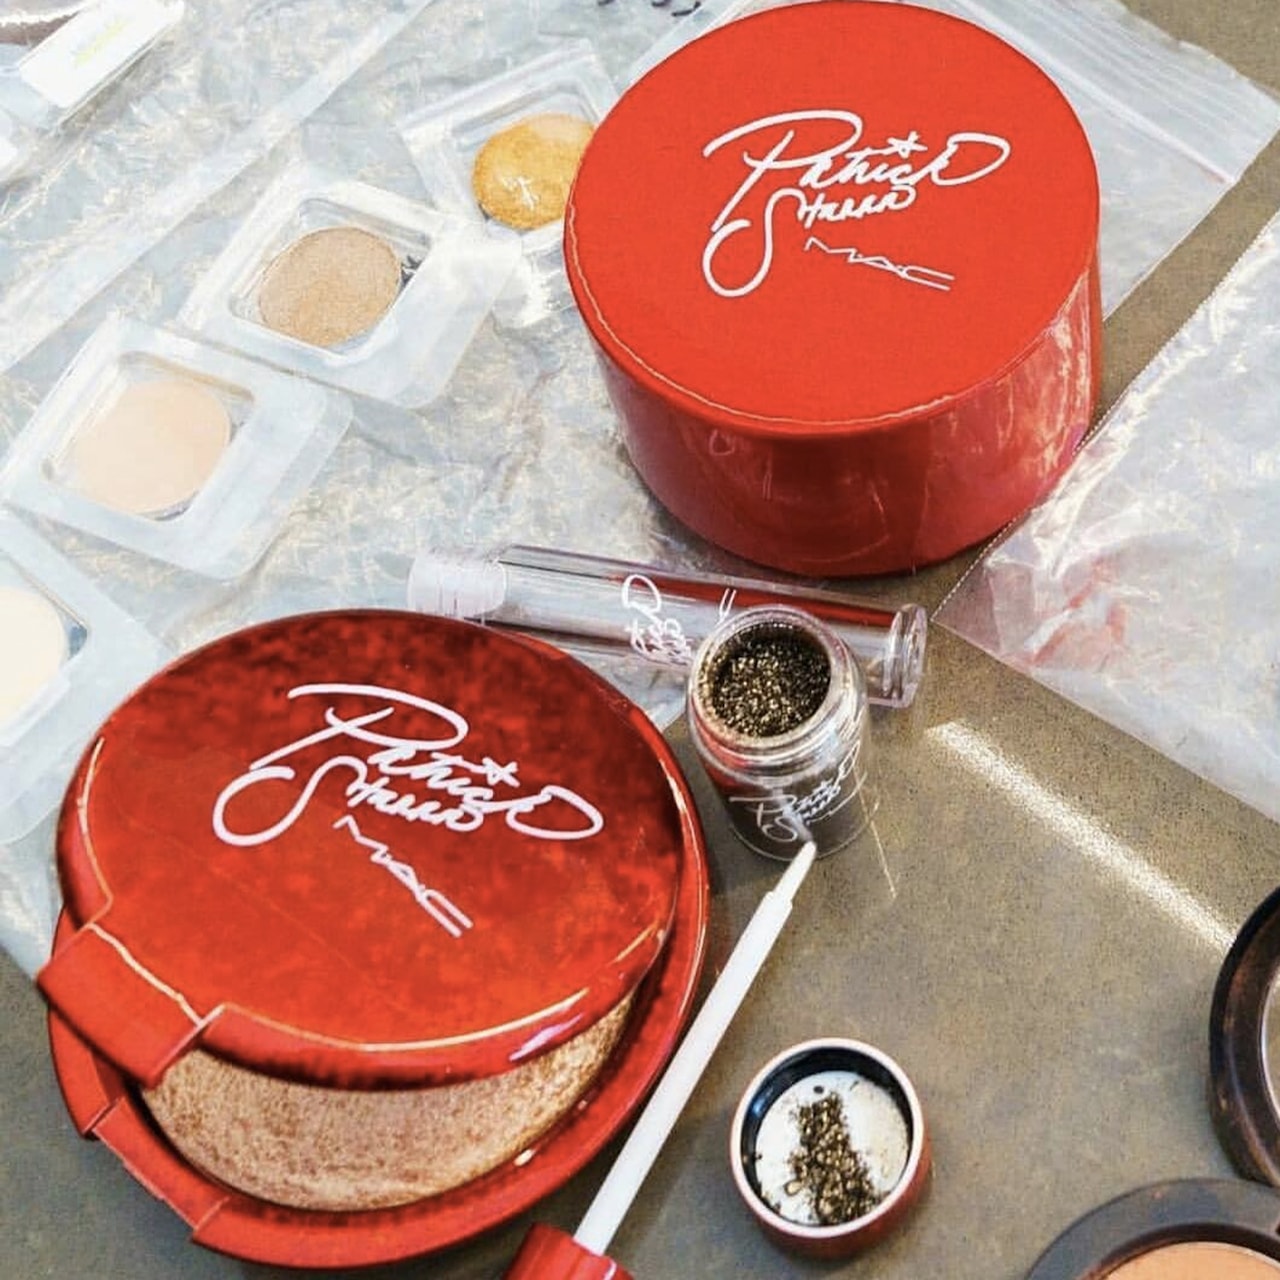 Patrick Starr x MAC Cosmetics "Sleigh Ride" Makeup Collection Range Holiday Theme